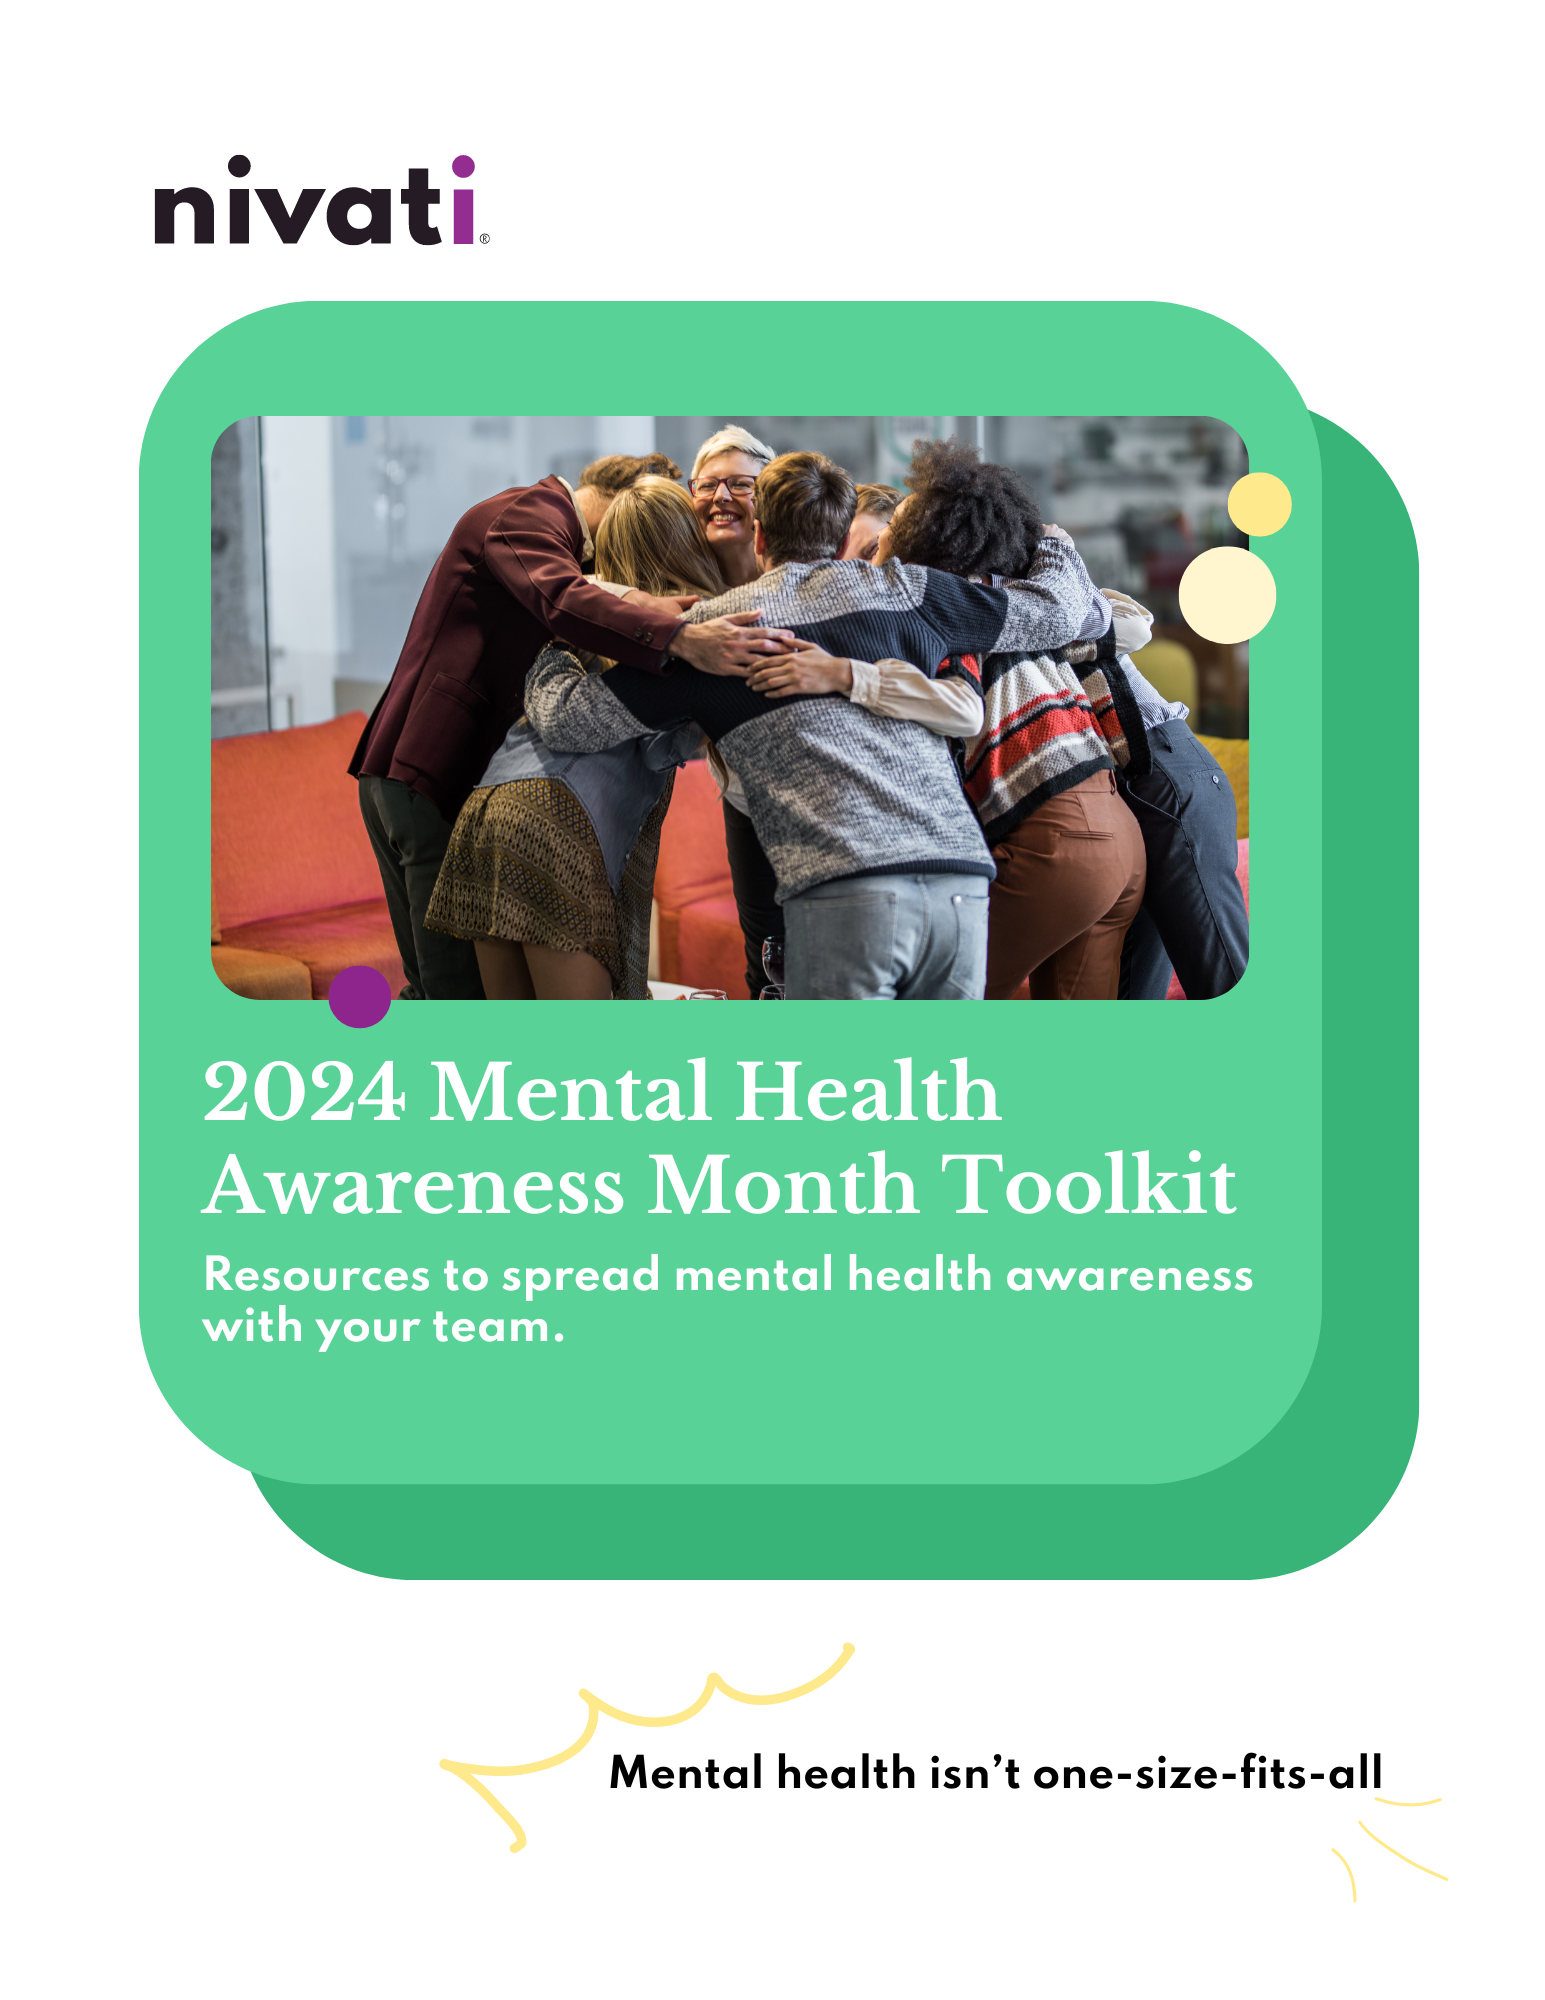 2024 Mental Health Awareness Month Toolkit by Nivati